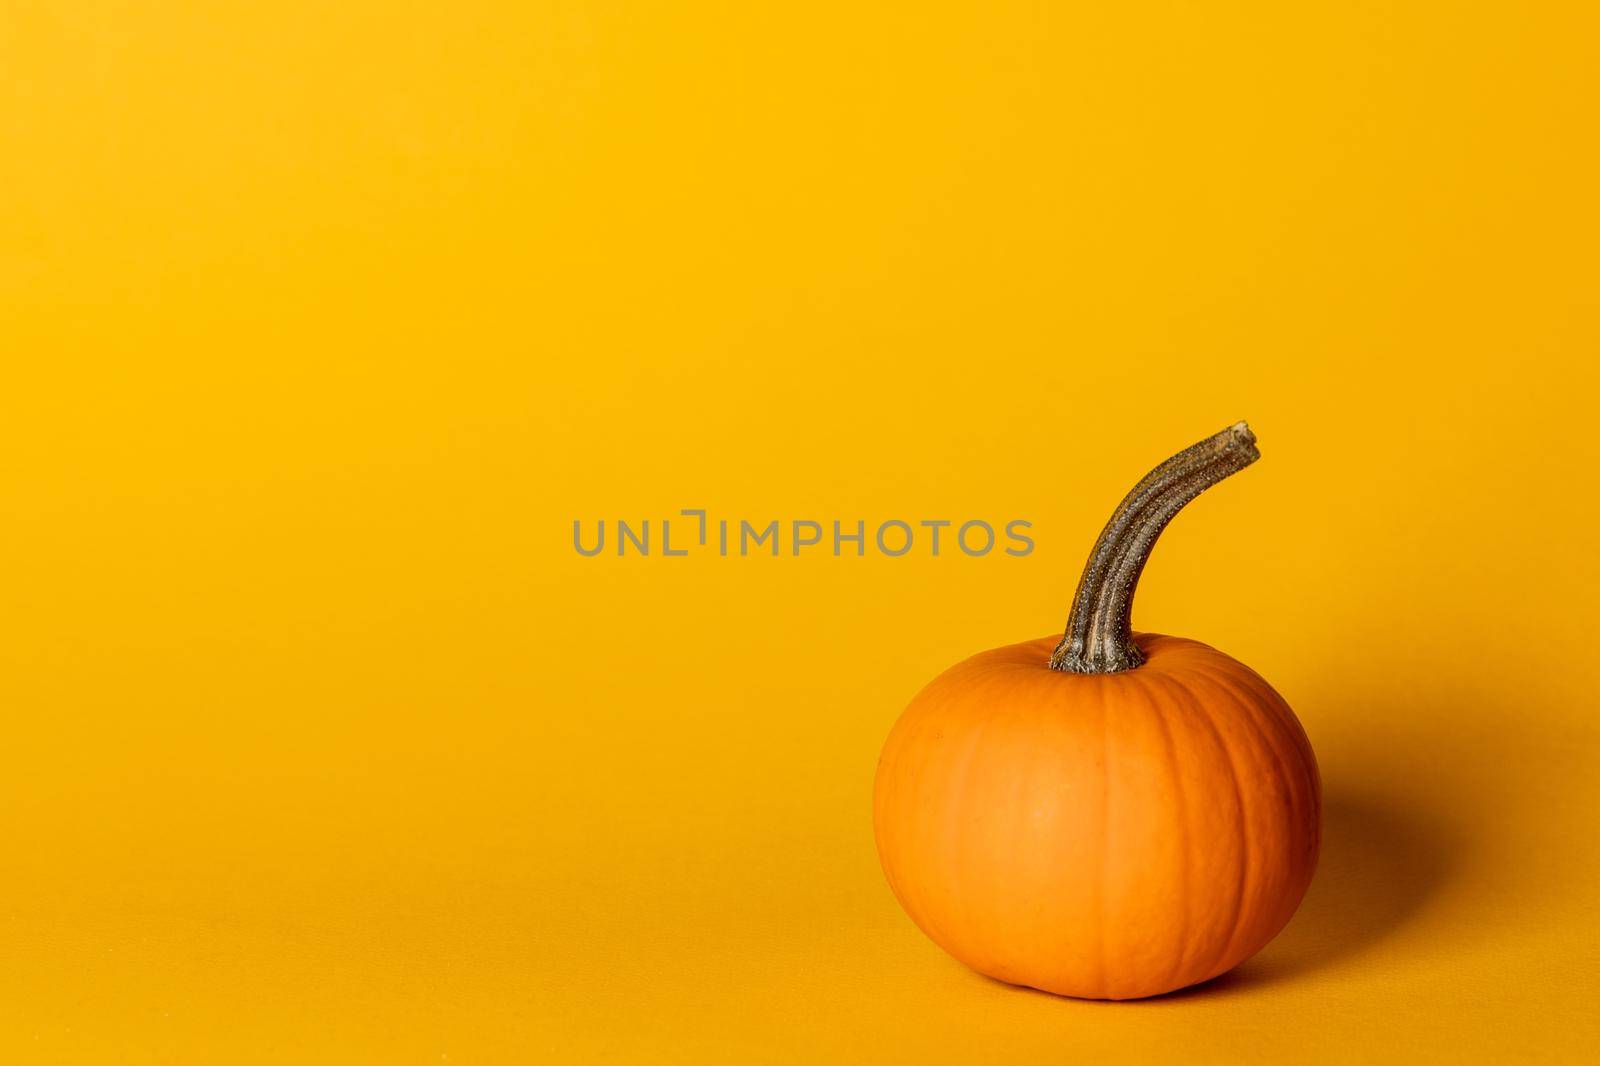 Whole pumpkin on orange background by Yellowj